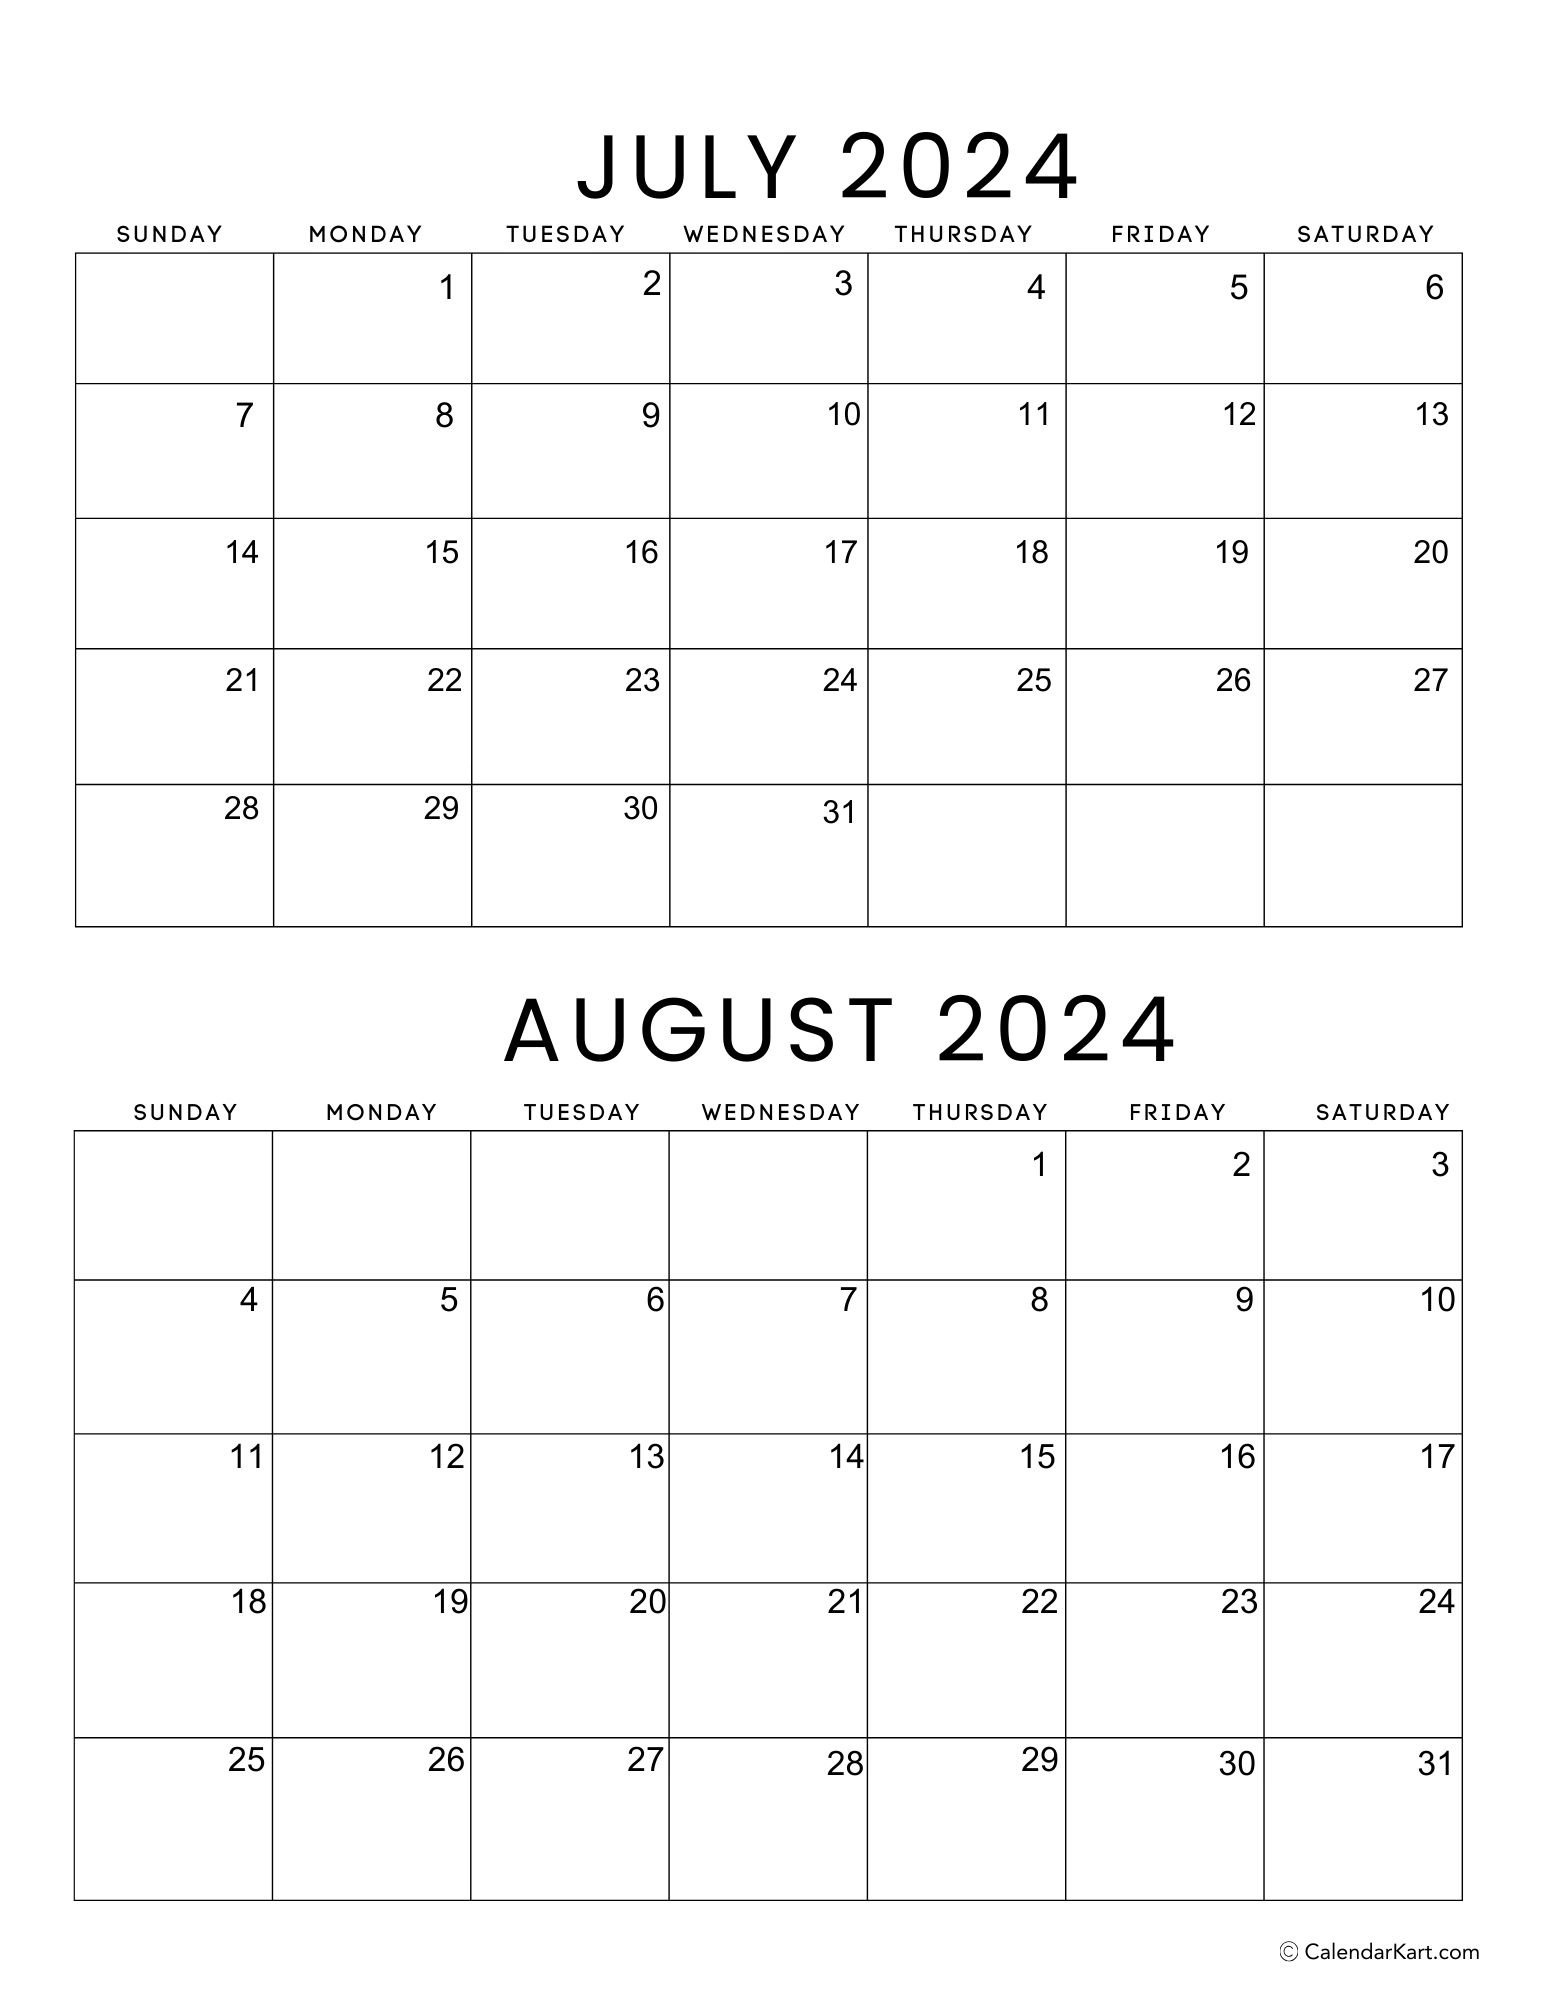 Printable July August 2024 Calendar | Calendarkart with regard to July August Blank Calendar 2024